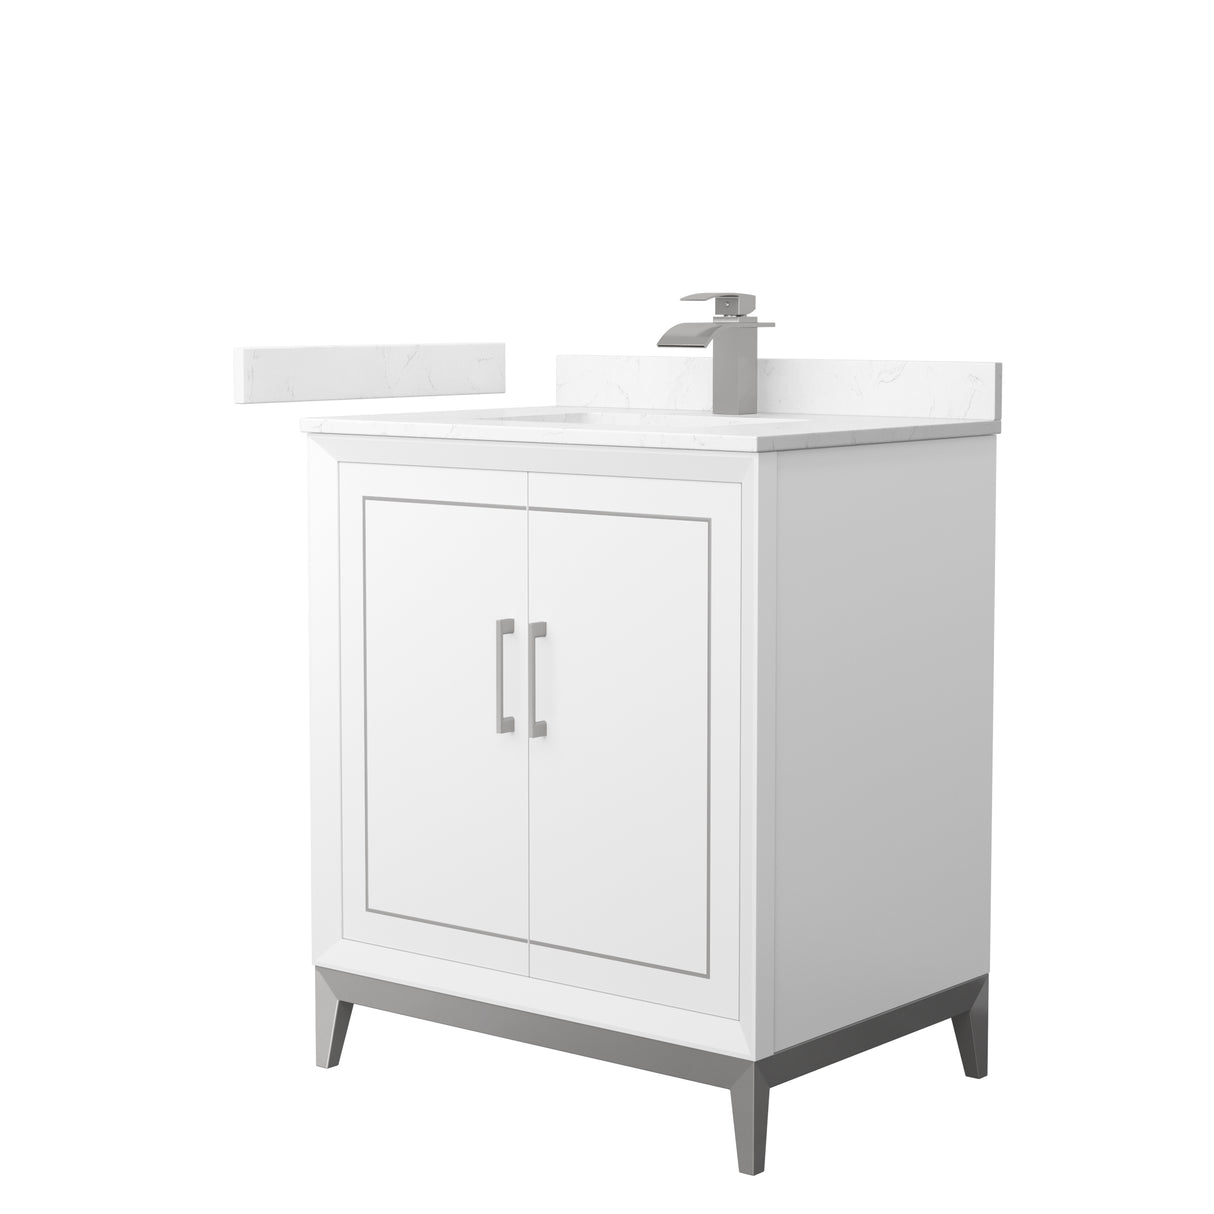 Marlena 30 Inch Single Bathroom Vanity in White Carrara Cultured Marble Countertop Undermount Square Sink Brushed Nickel Trim